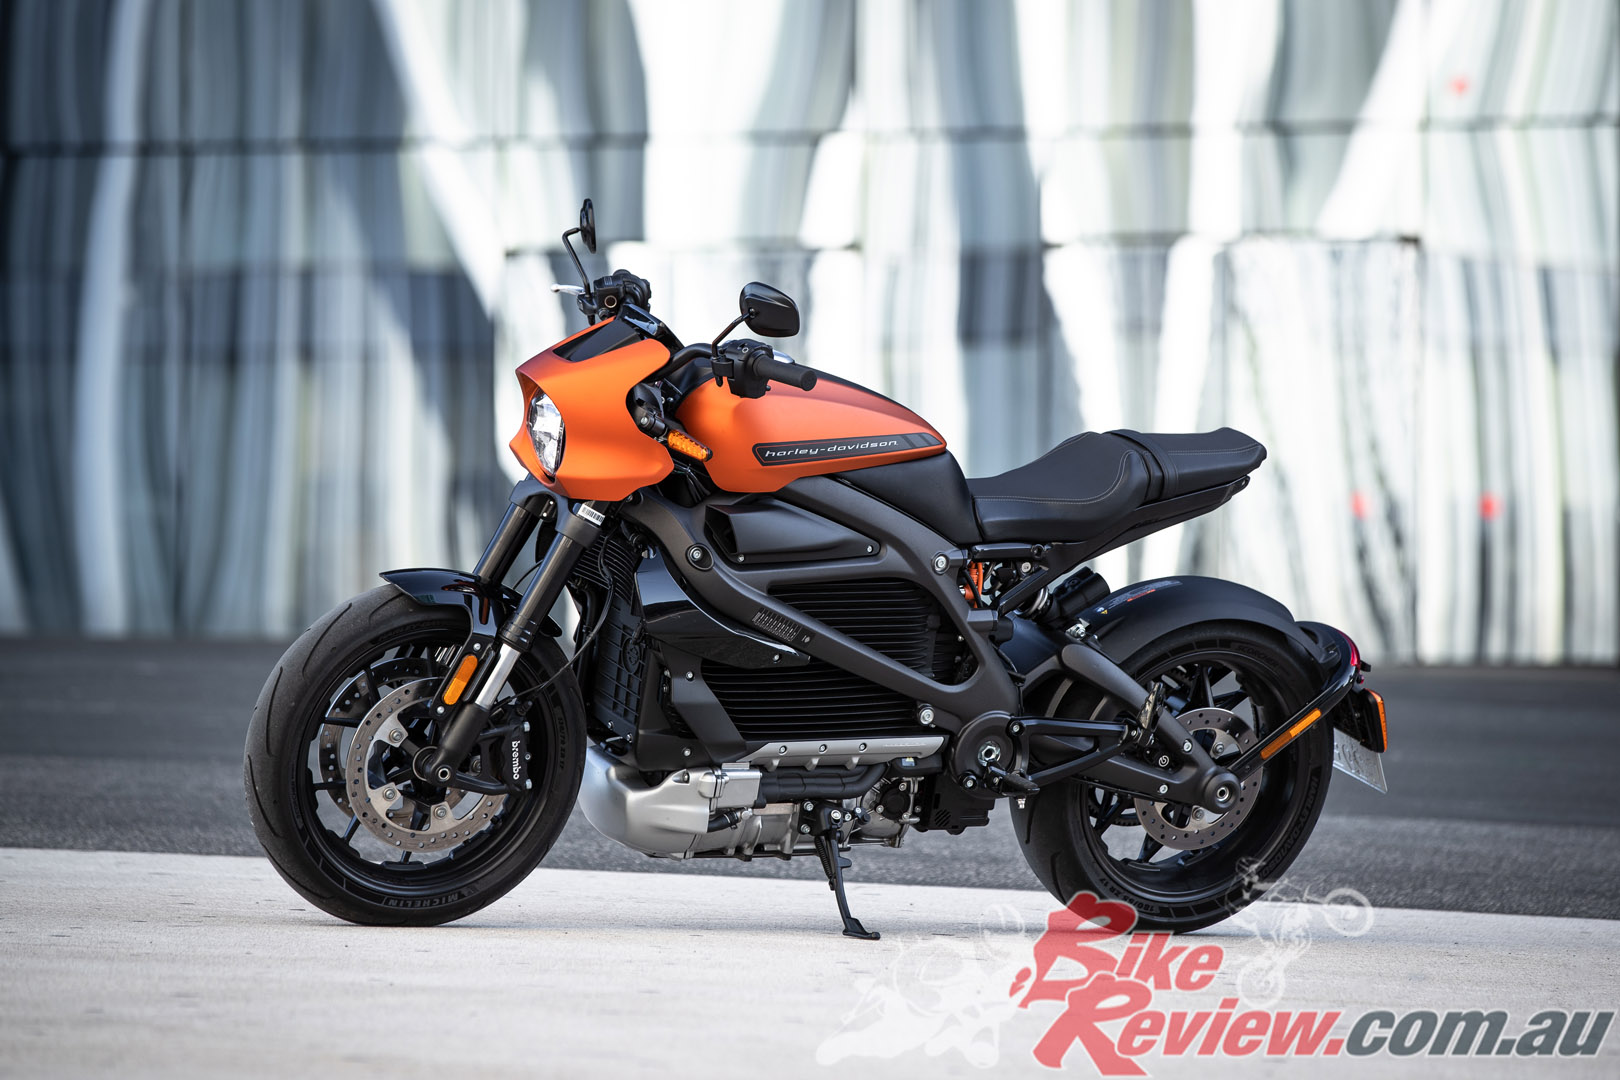 Review 2020 Harley Davidson Livewire Aussie Launch Bike Review